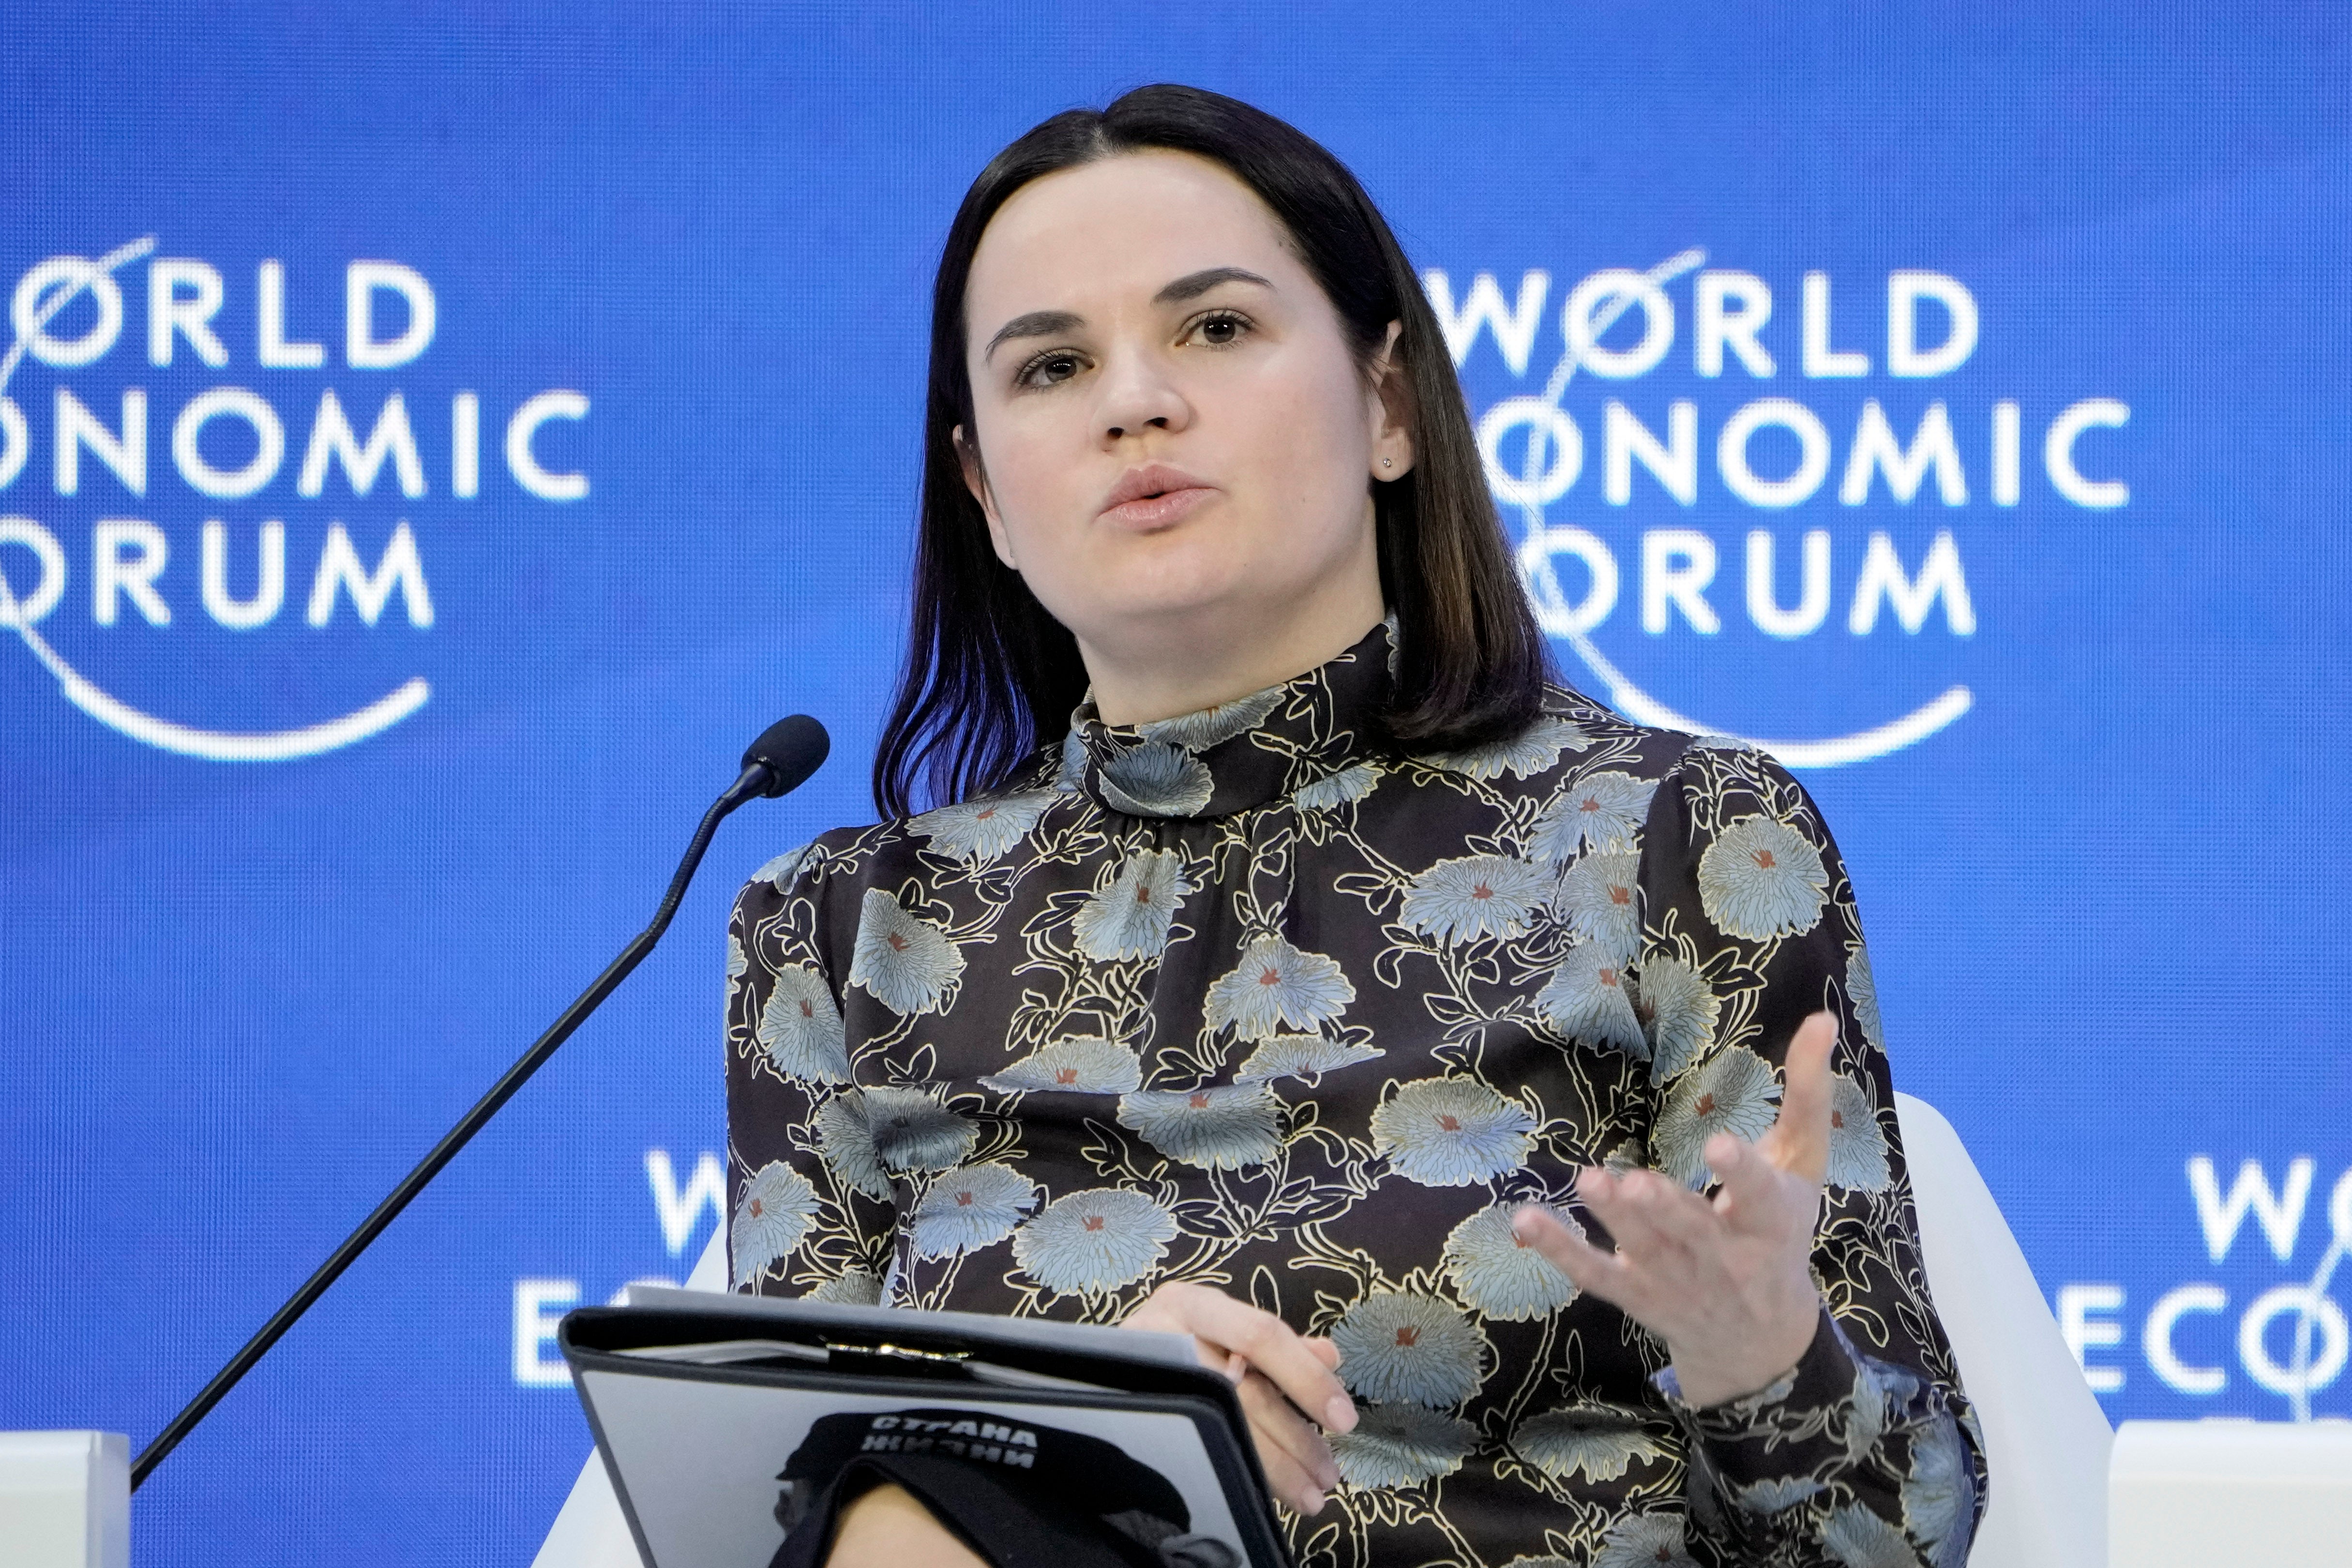 Sviatlana Tsikhanouskaya at the World Economic Forum in Davos earlier this year